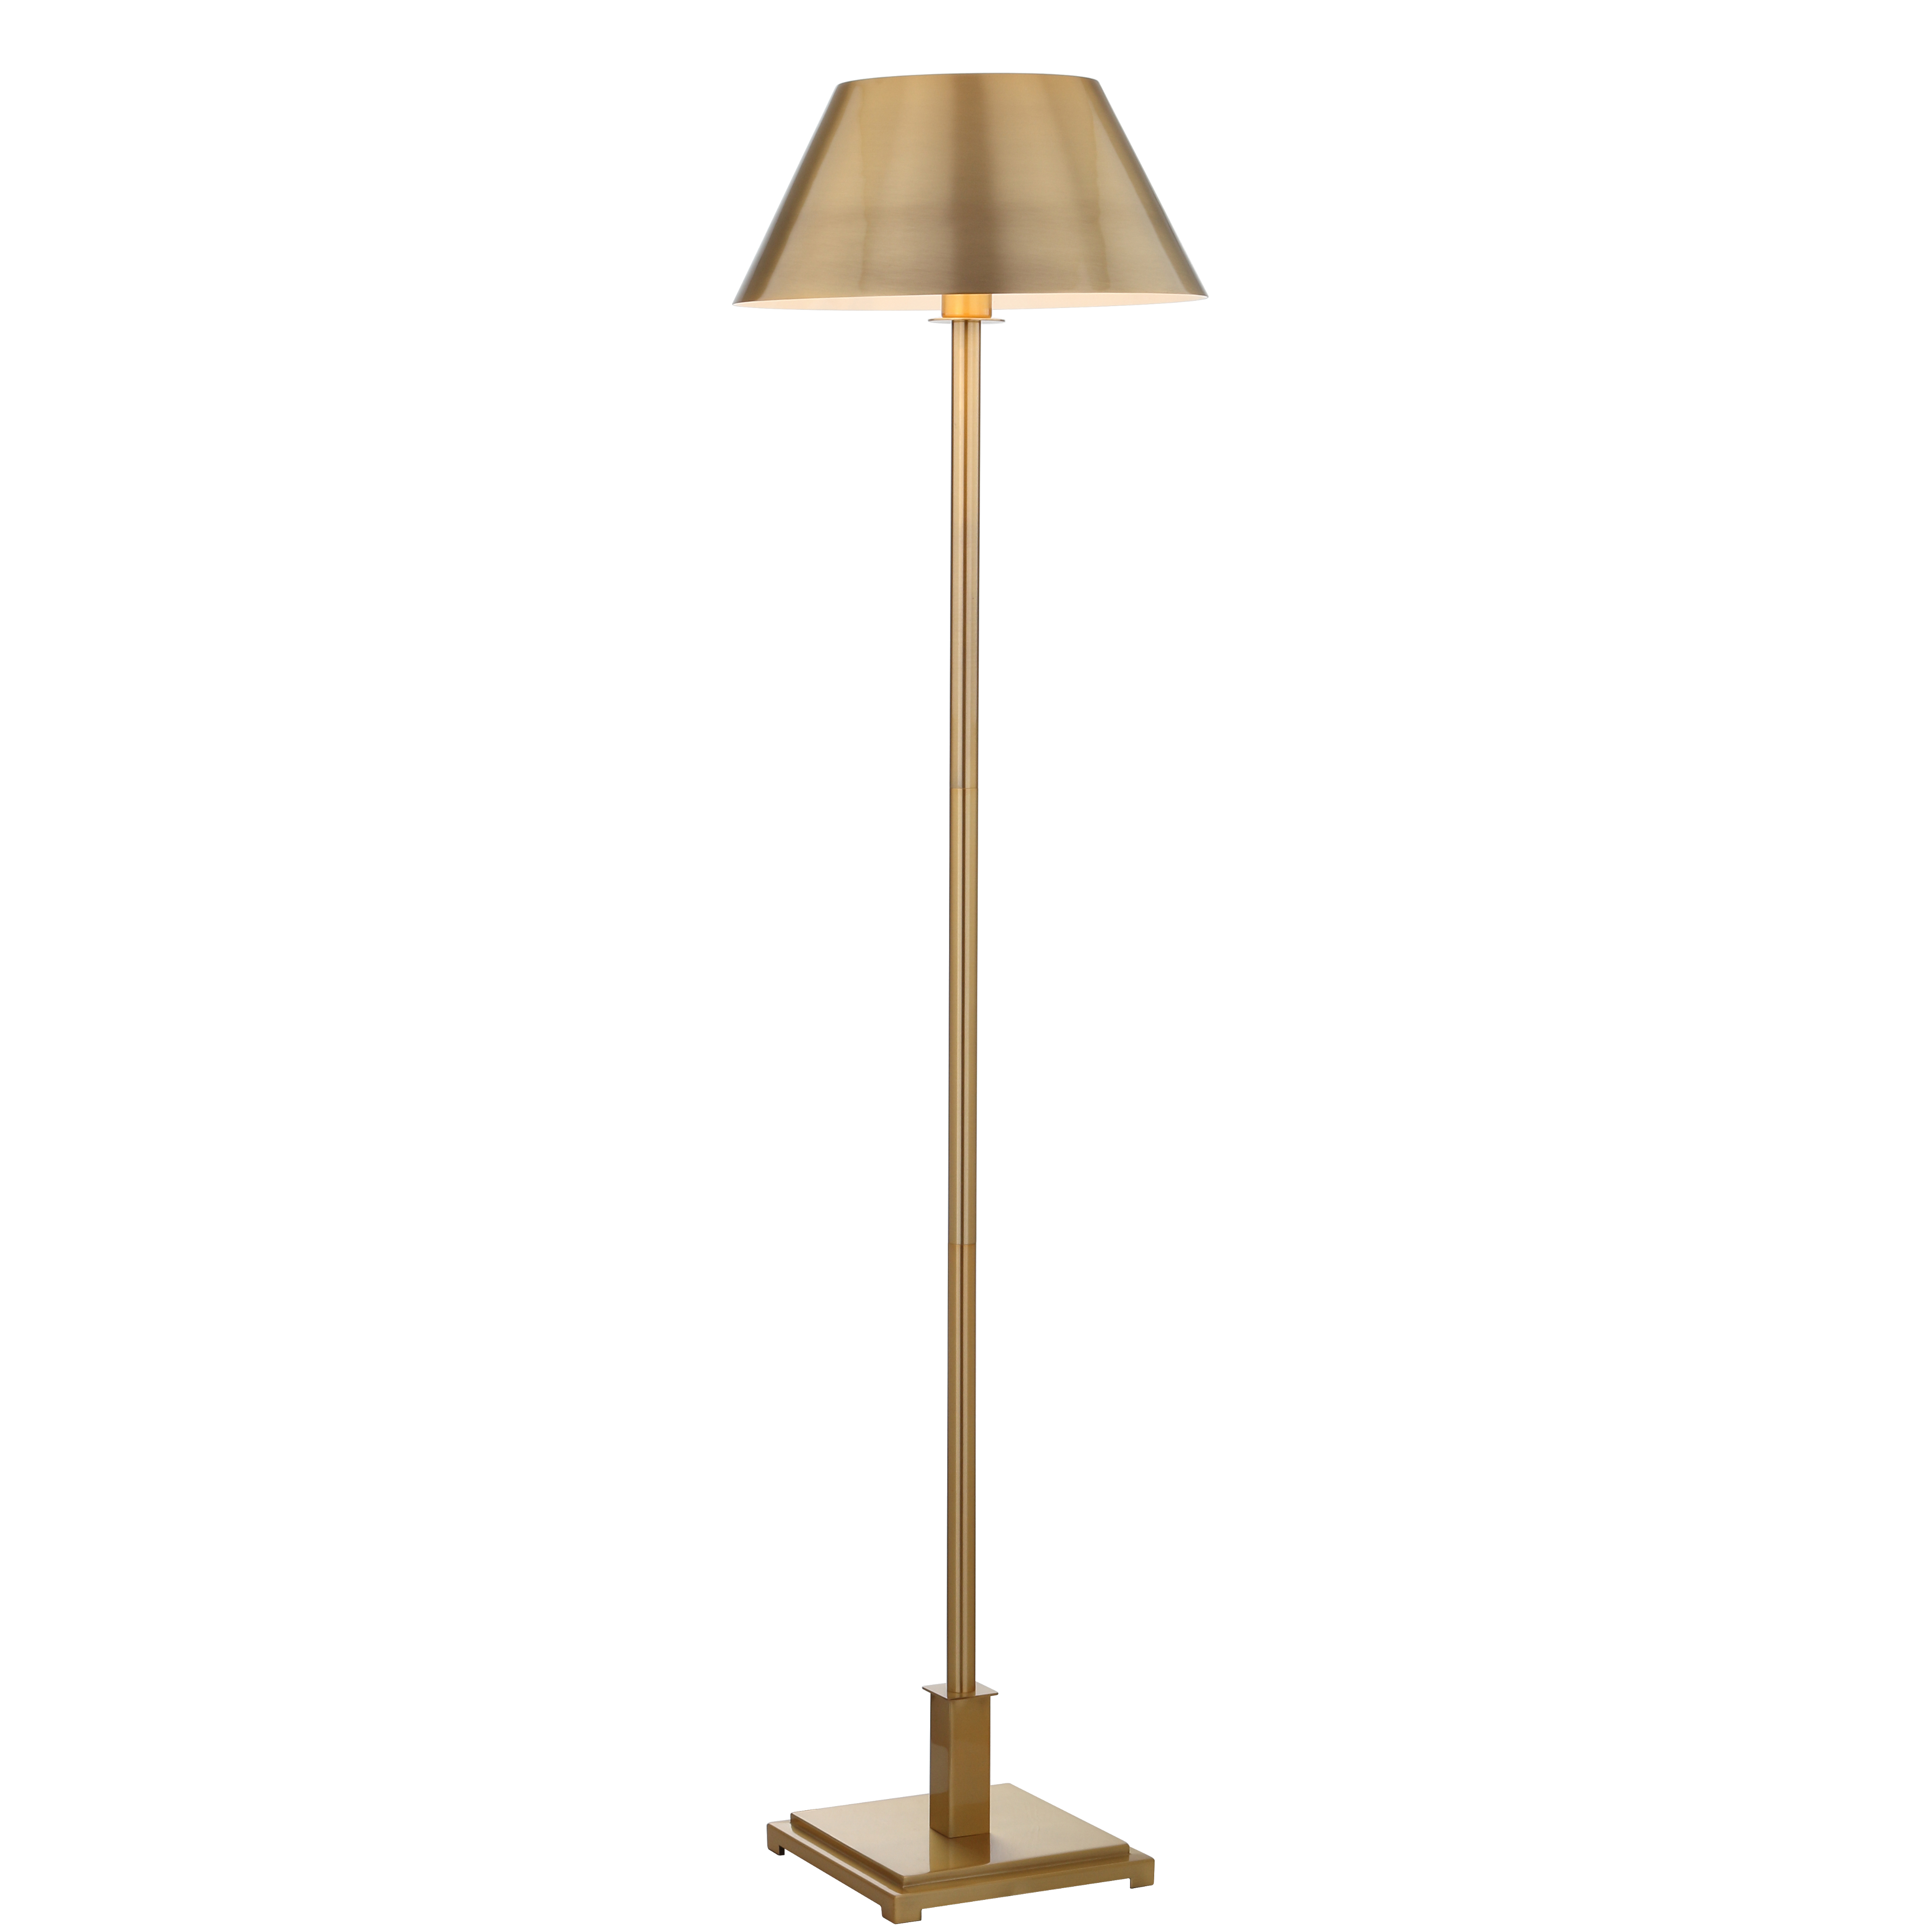 brass metal floor lamp with brass shade $370.00